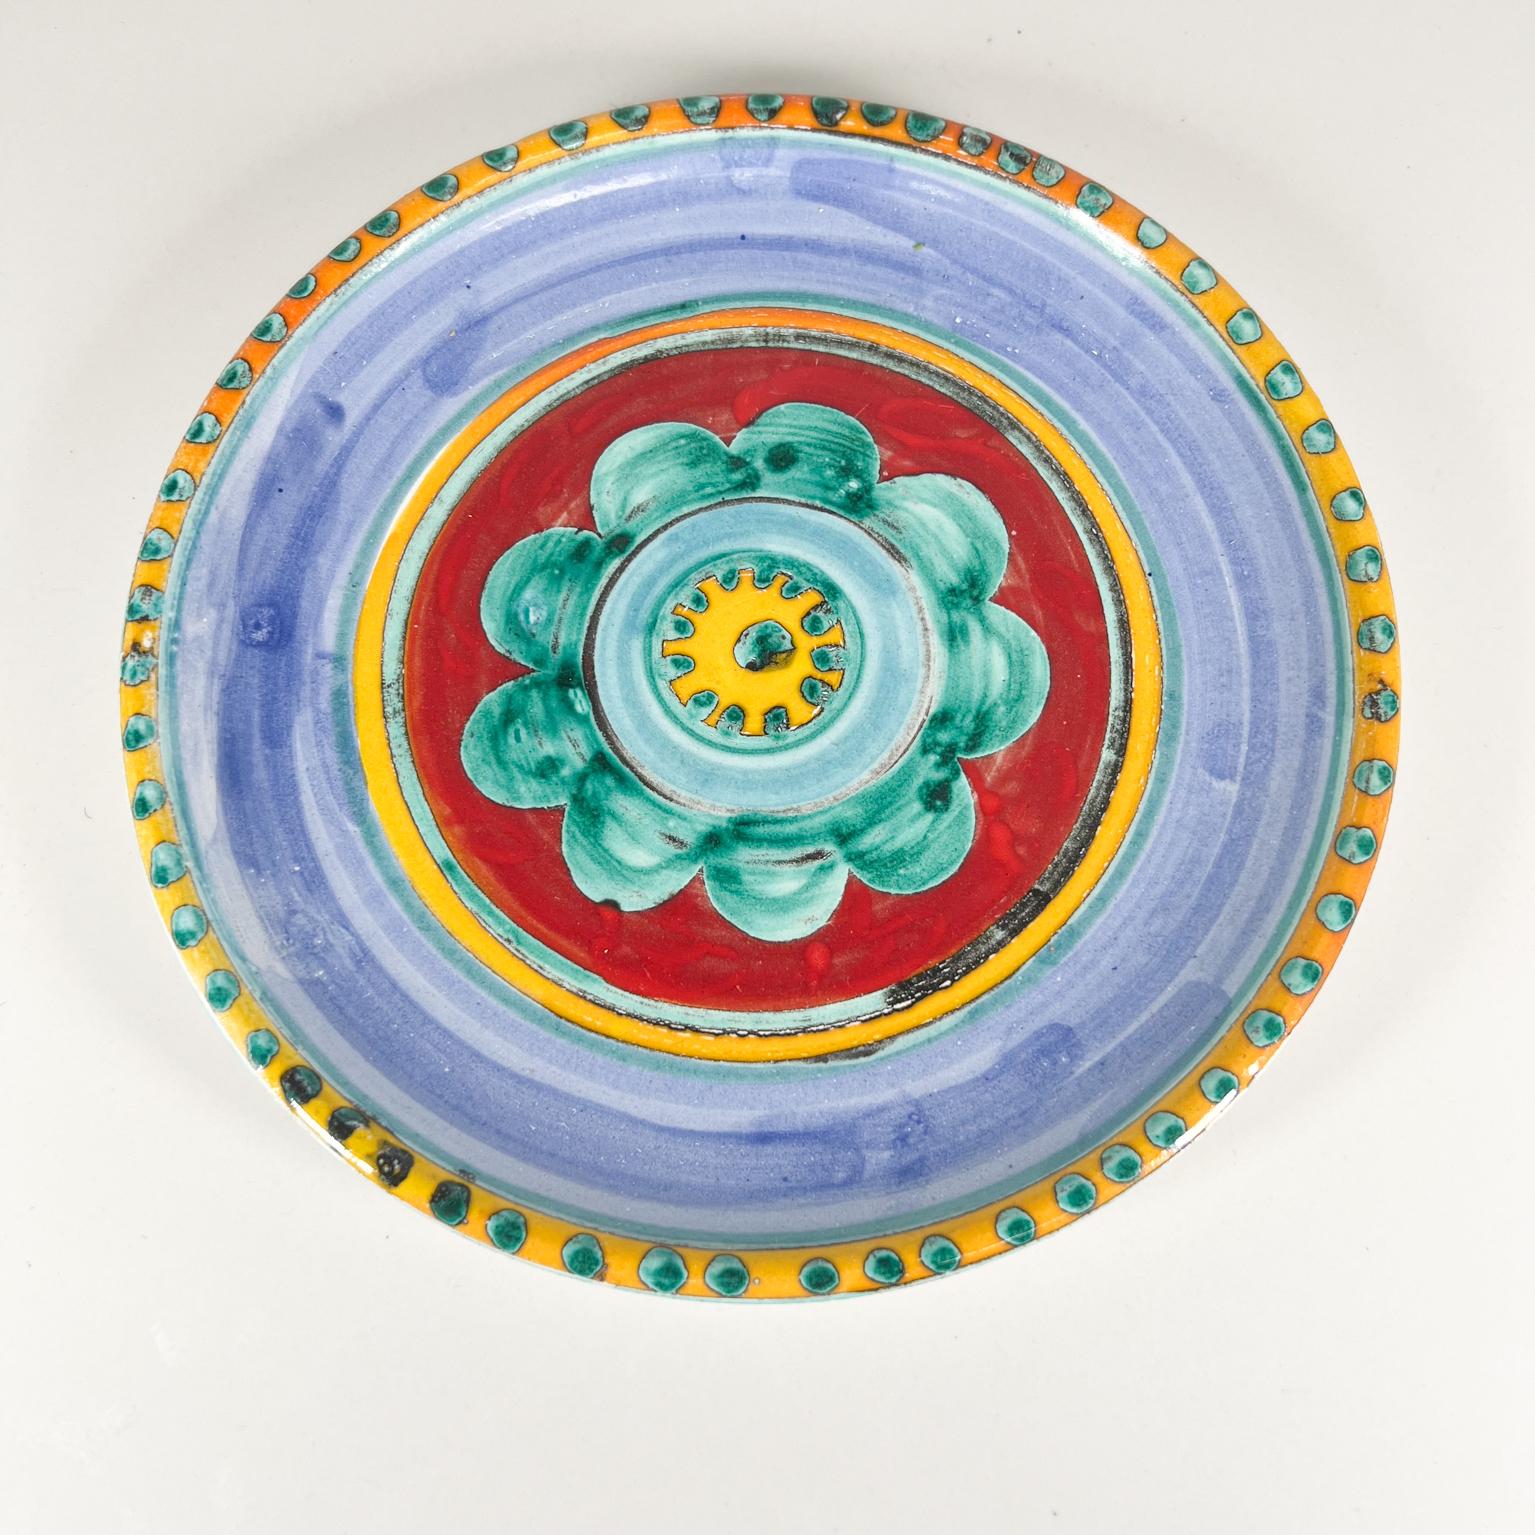 1960s DeSimone of Italy colorful ceramic pottery hand painted art plate 
Giovanni Desimone Italy
8.75 diameter x .88 tall
Inscription: CER DESIMONE *
Original vintage condition.
Refer to images.

 